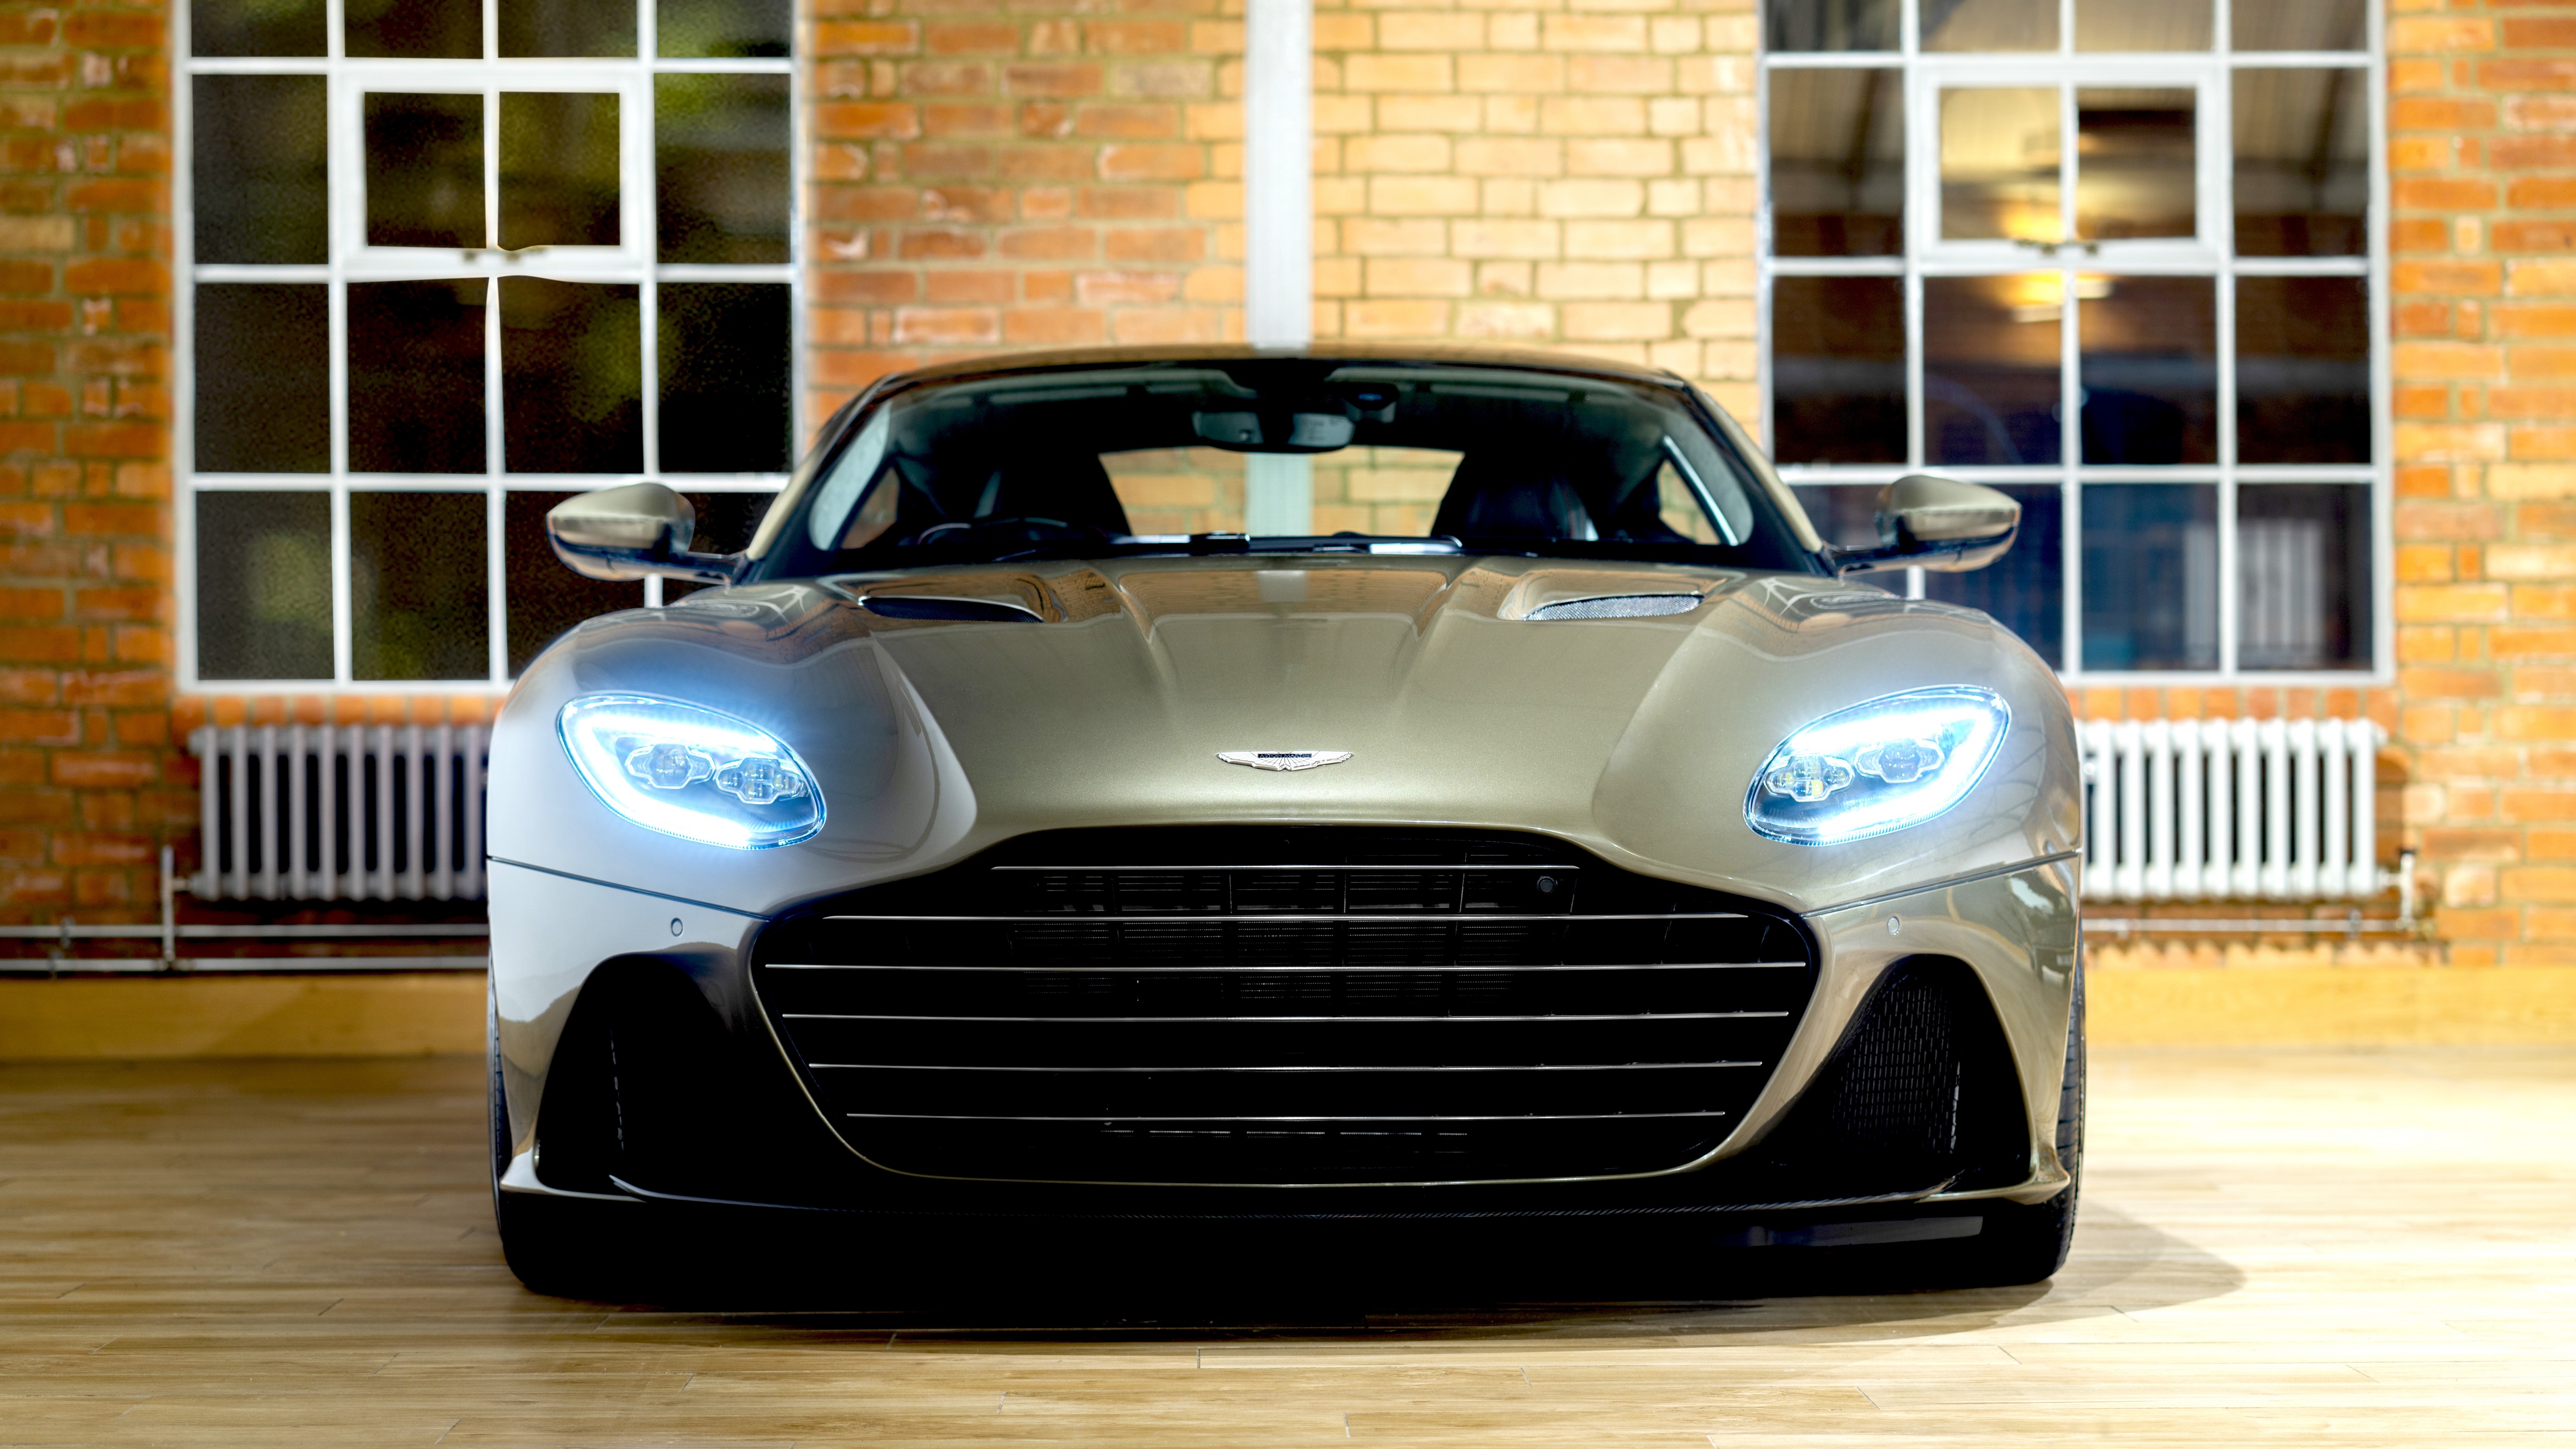 Aston Martin DBS Superleggera Wallpaper 4K, 5K, 8K, Cars